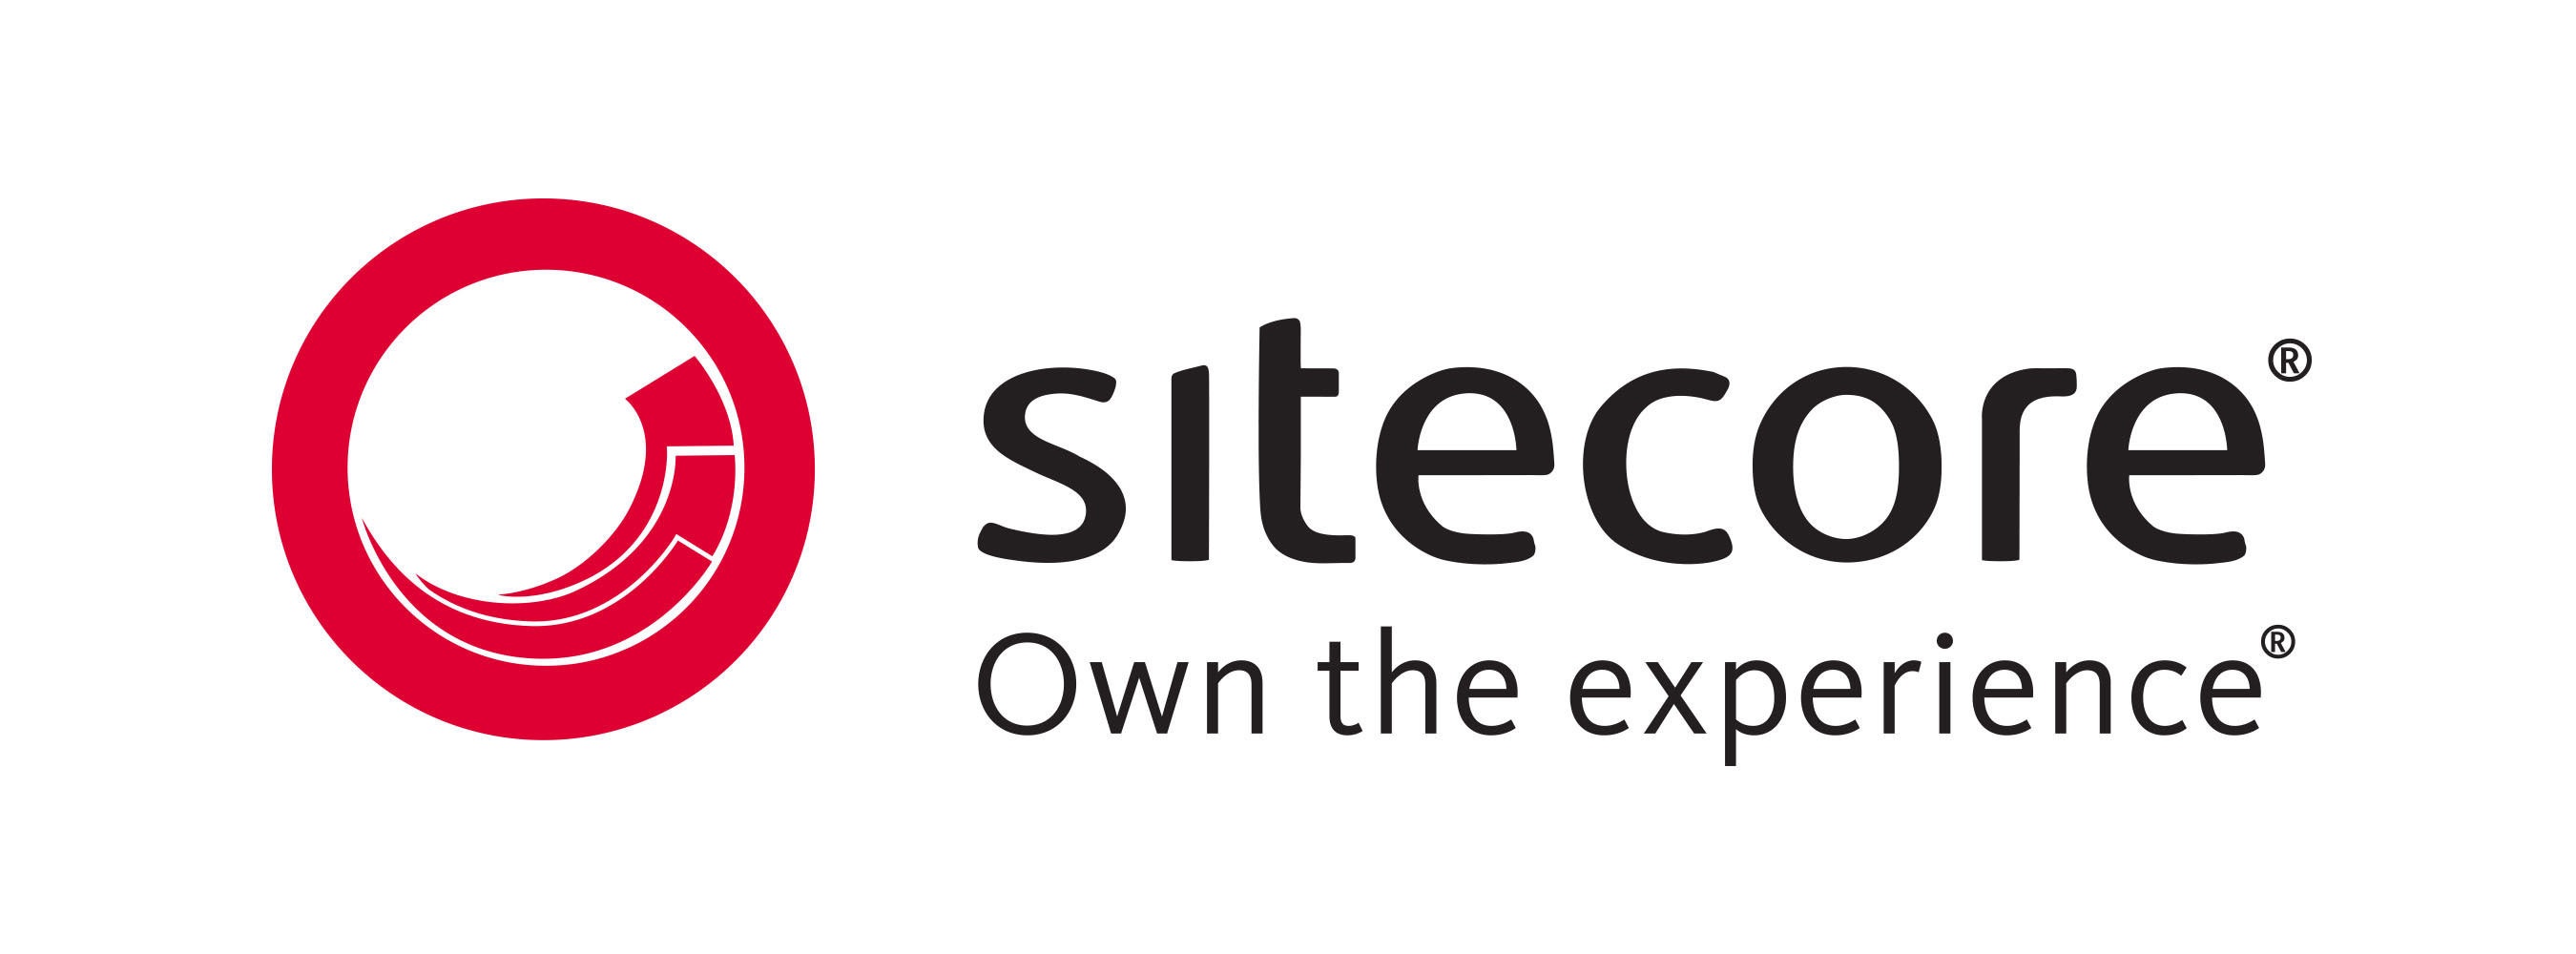 Sitecore Logo.